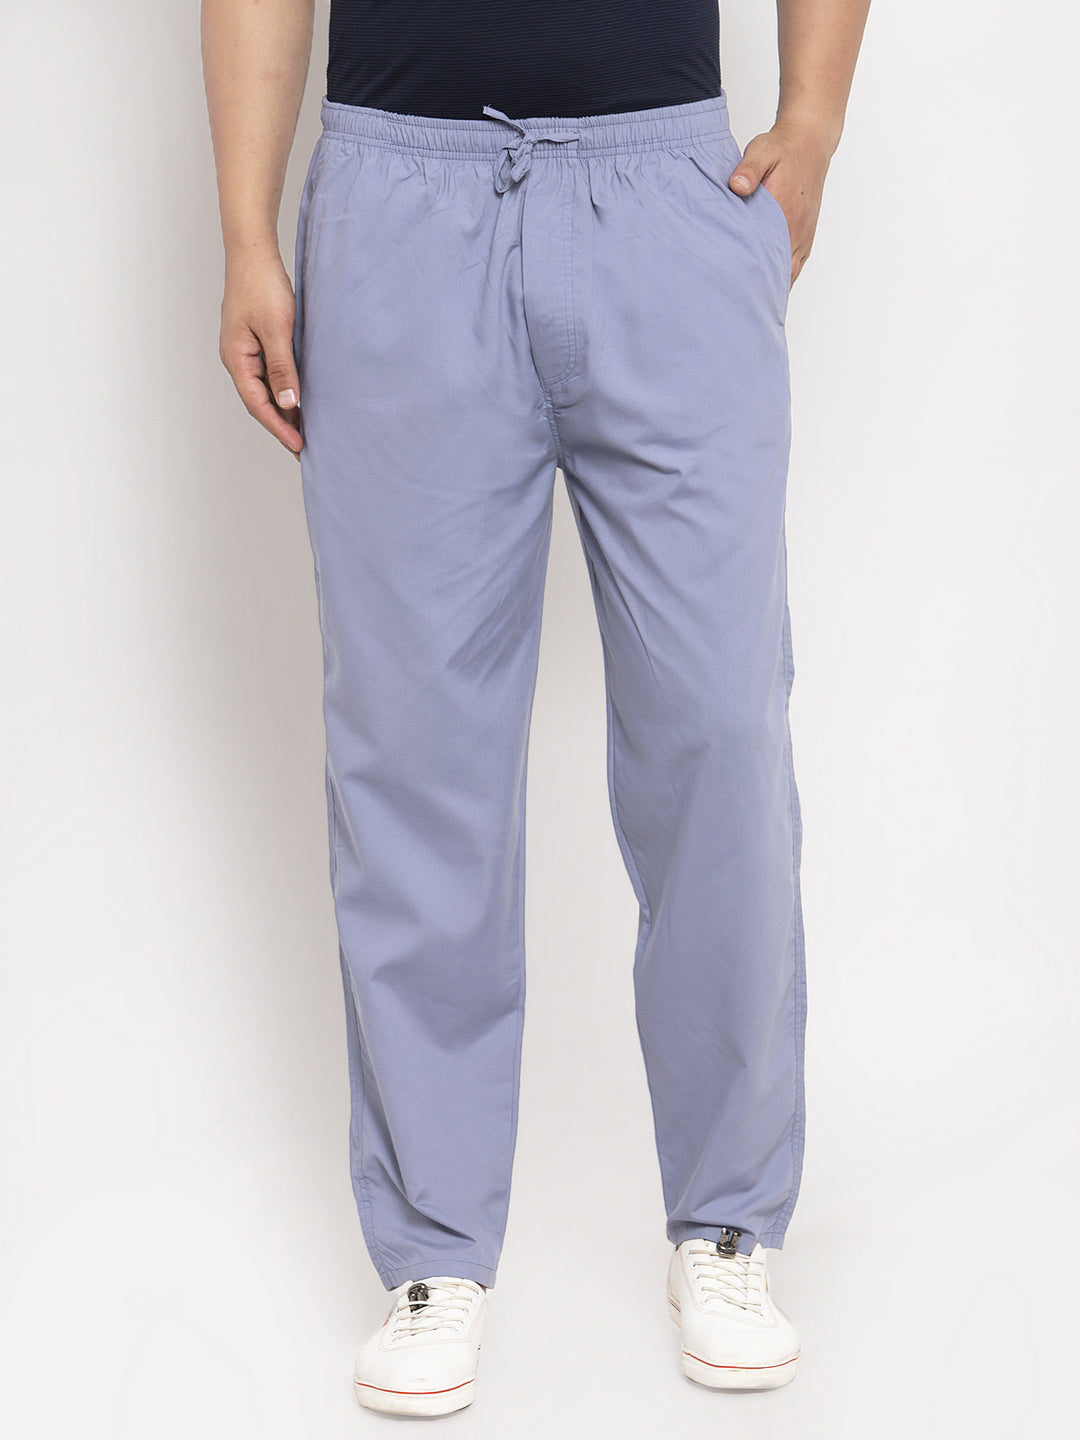 Men's Grey Solid Cotton Track Pants ( JOG 011Light-Grey ) - Jainish